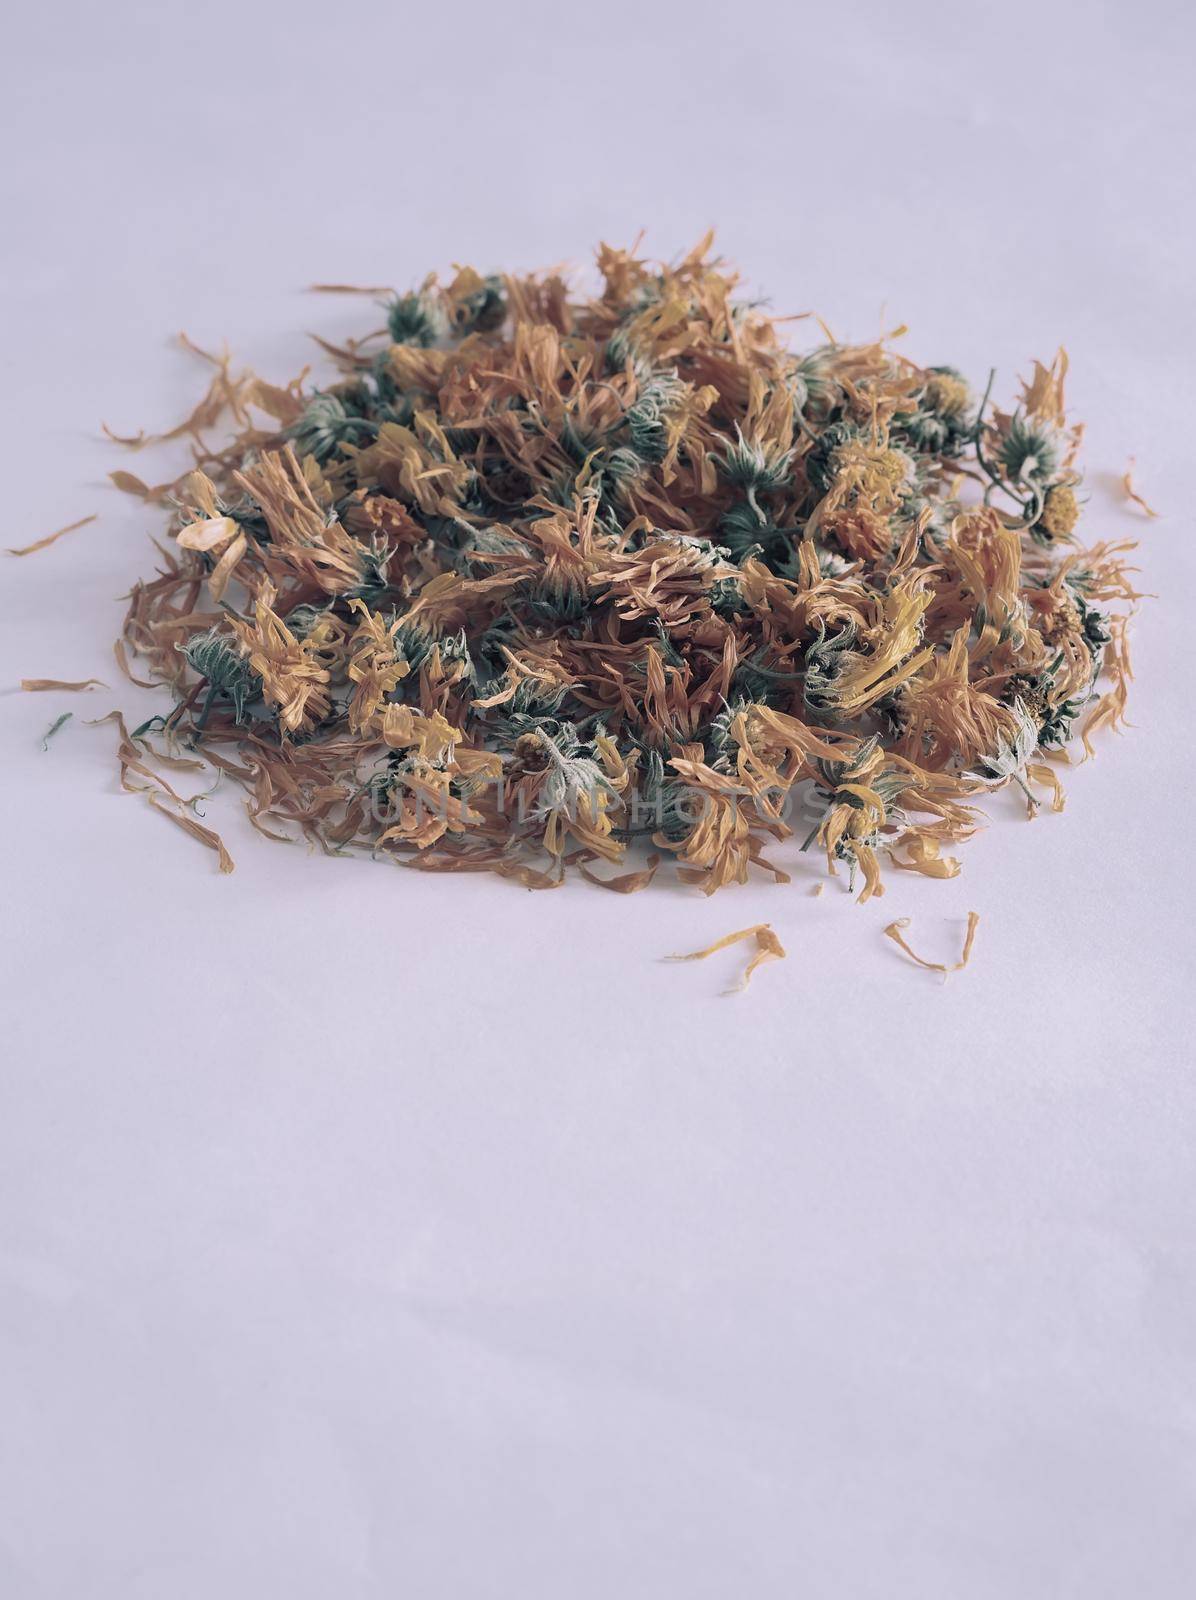 Valuable medicinal raw materials: dried calendula flowers by georgina198